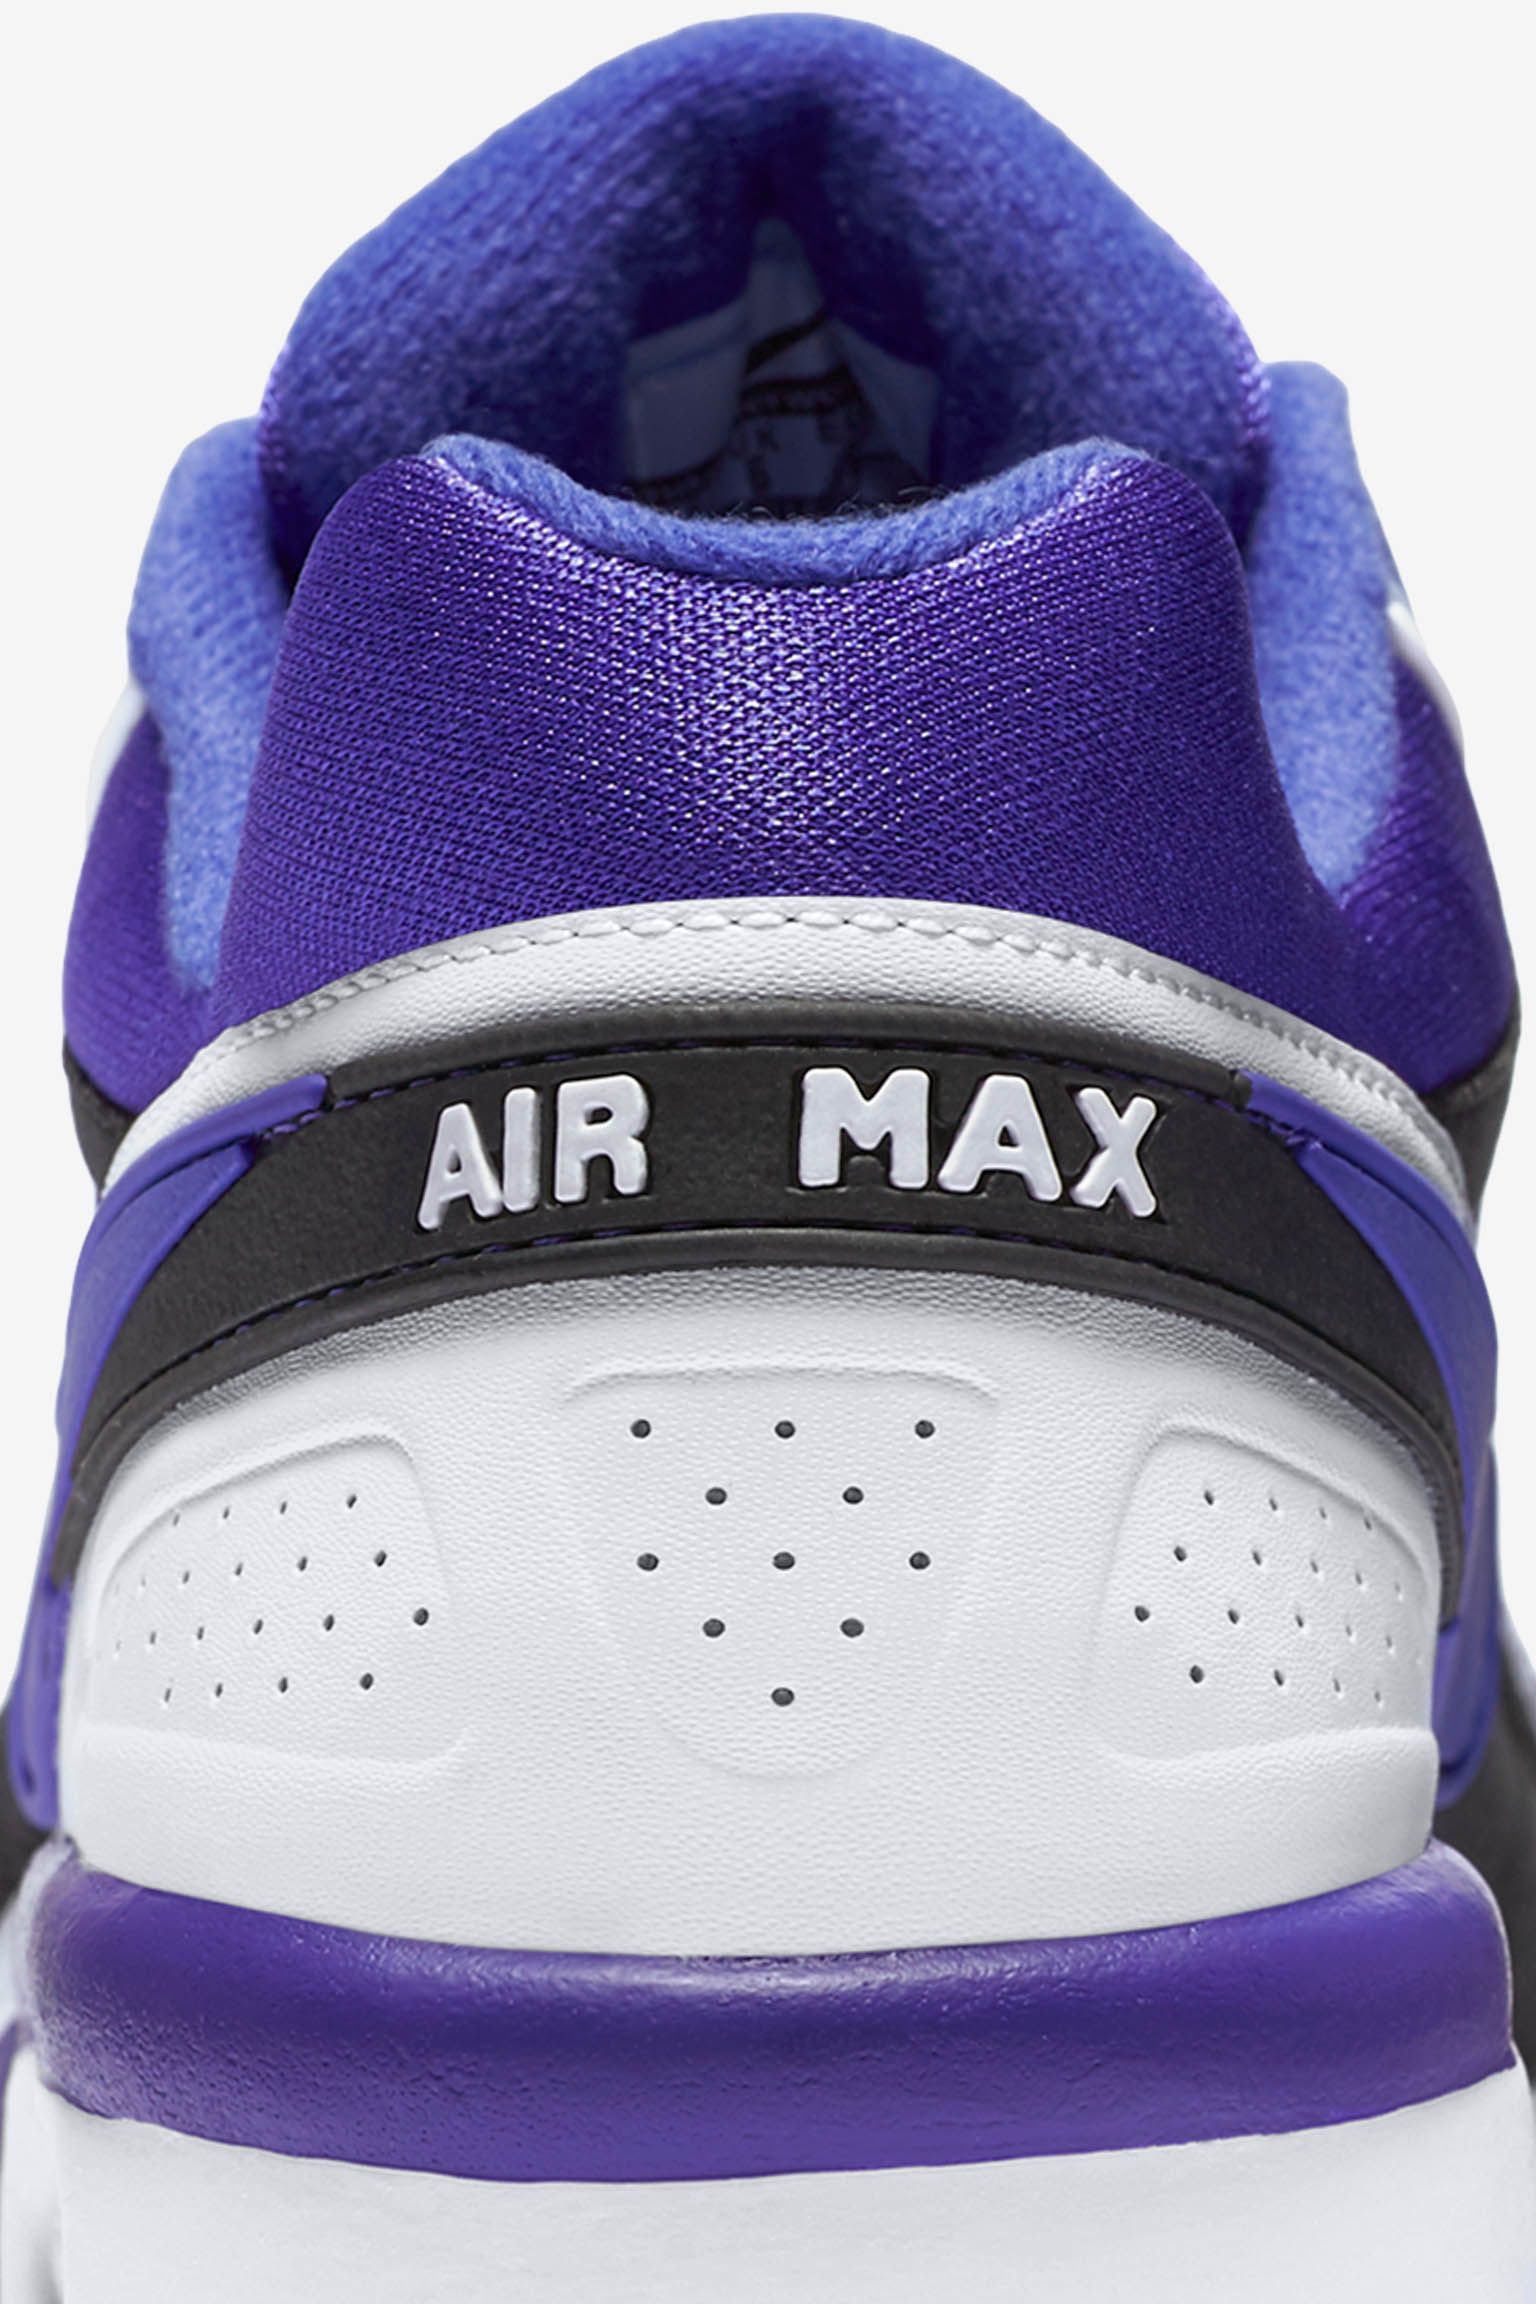 Nike Air Max BW OG Persian Violet - Men’s 8 US / Women’s 9.5 US (New/DS)